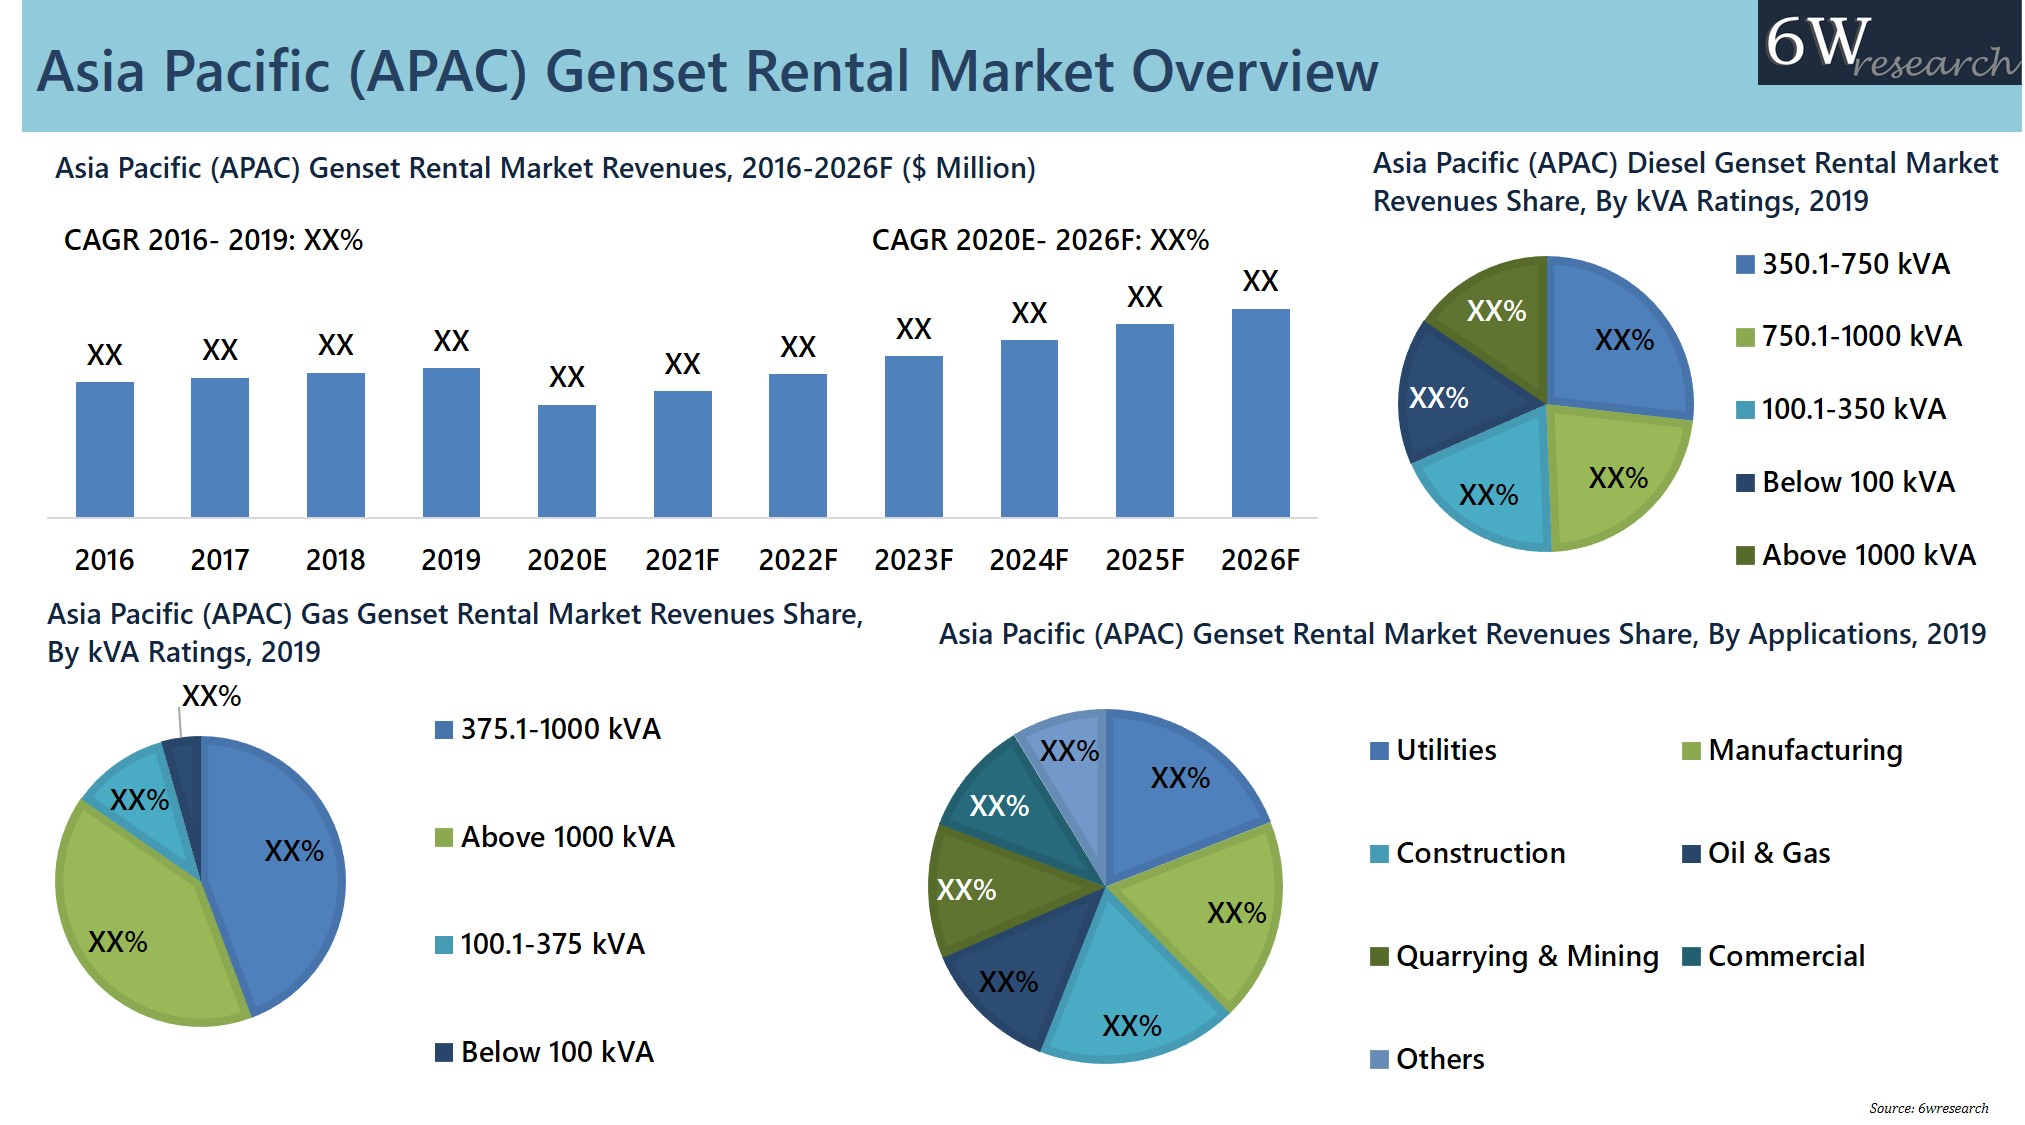 Asia Pacific (APAC) Genset Rental Market